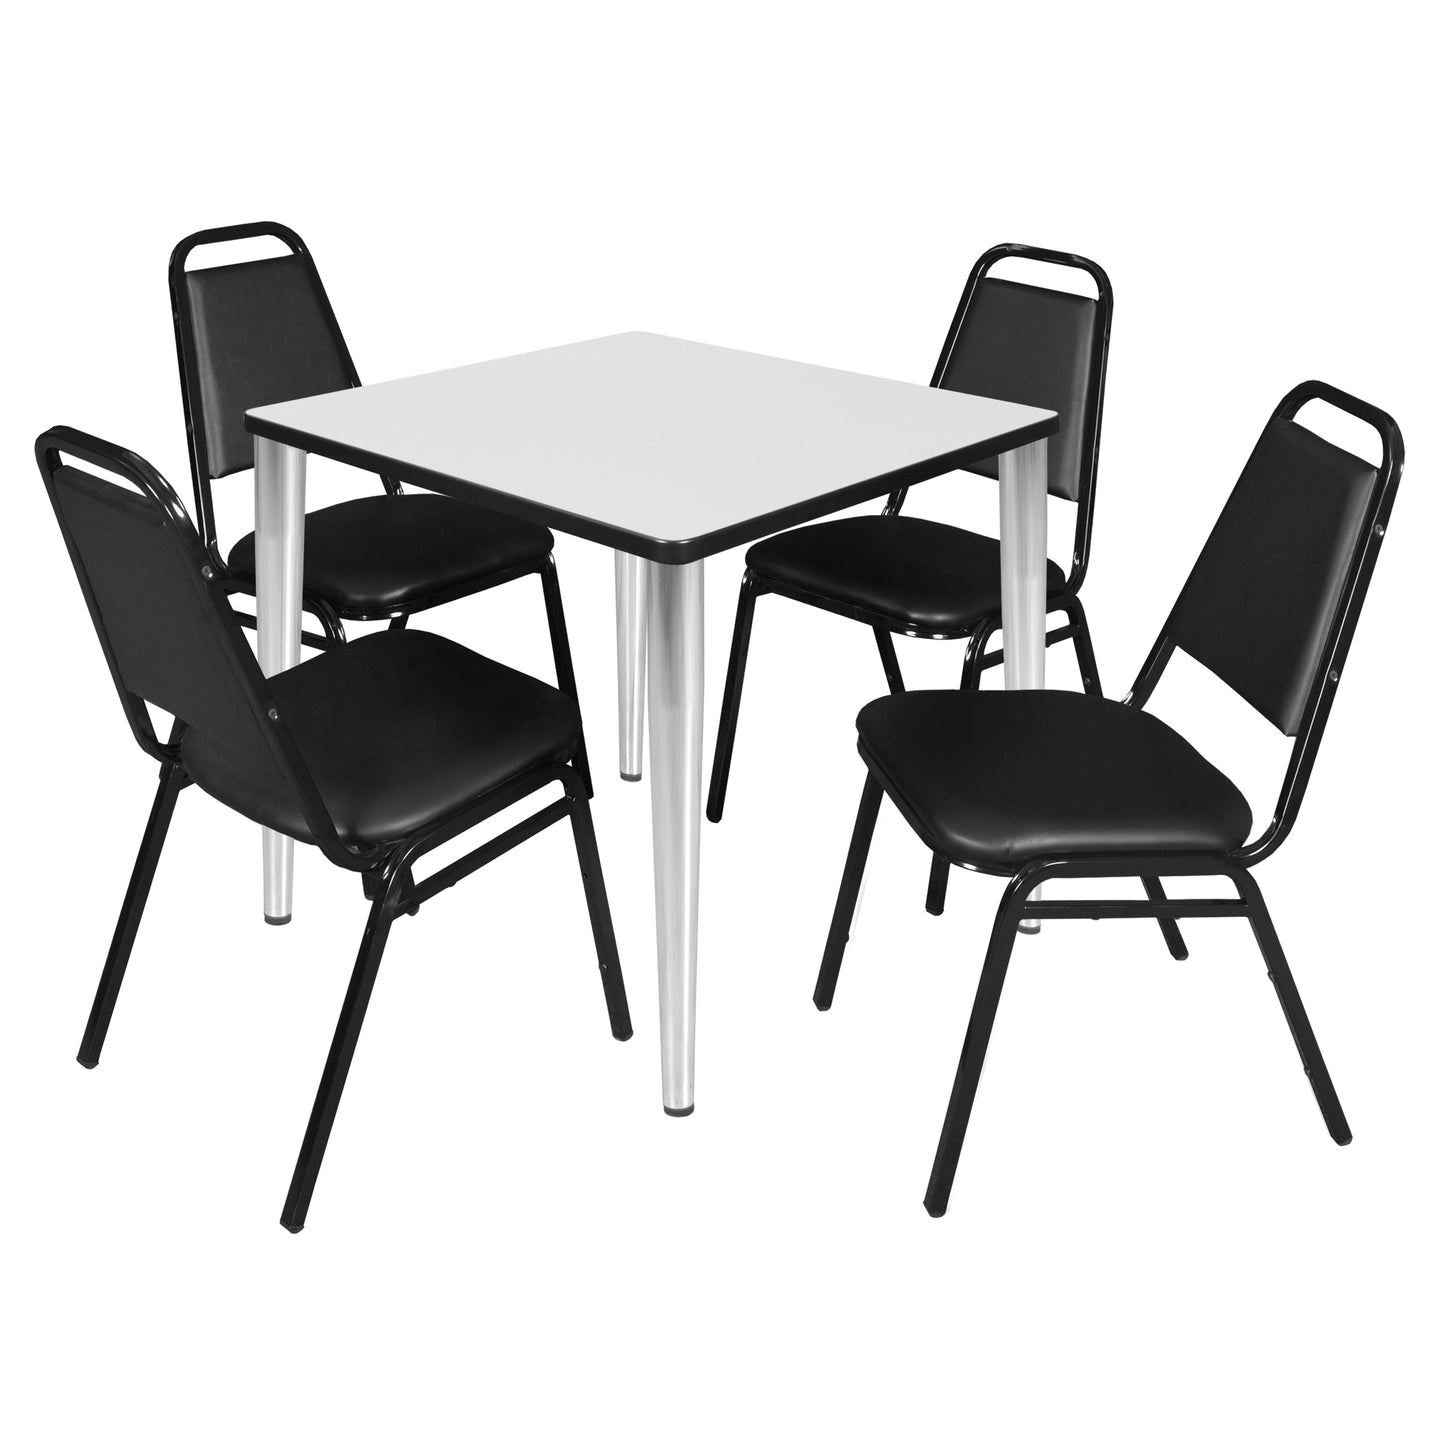 Regency Kahlo 30 in. Square Breakroom Table & 4 Restaurant Stack Chairs - Black